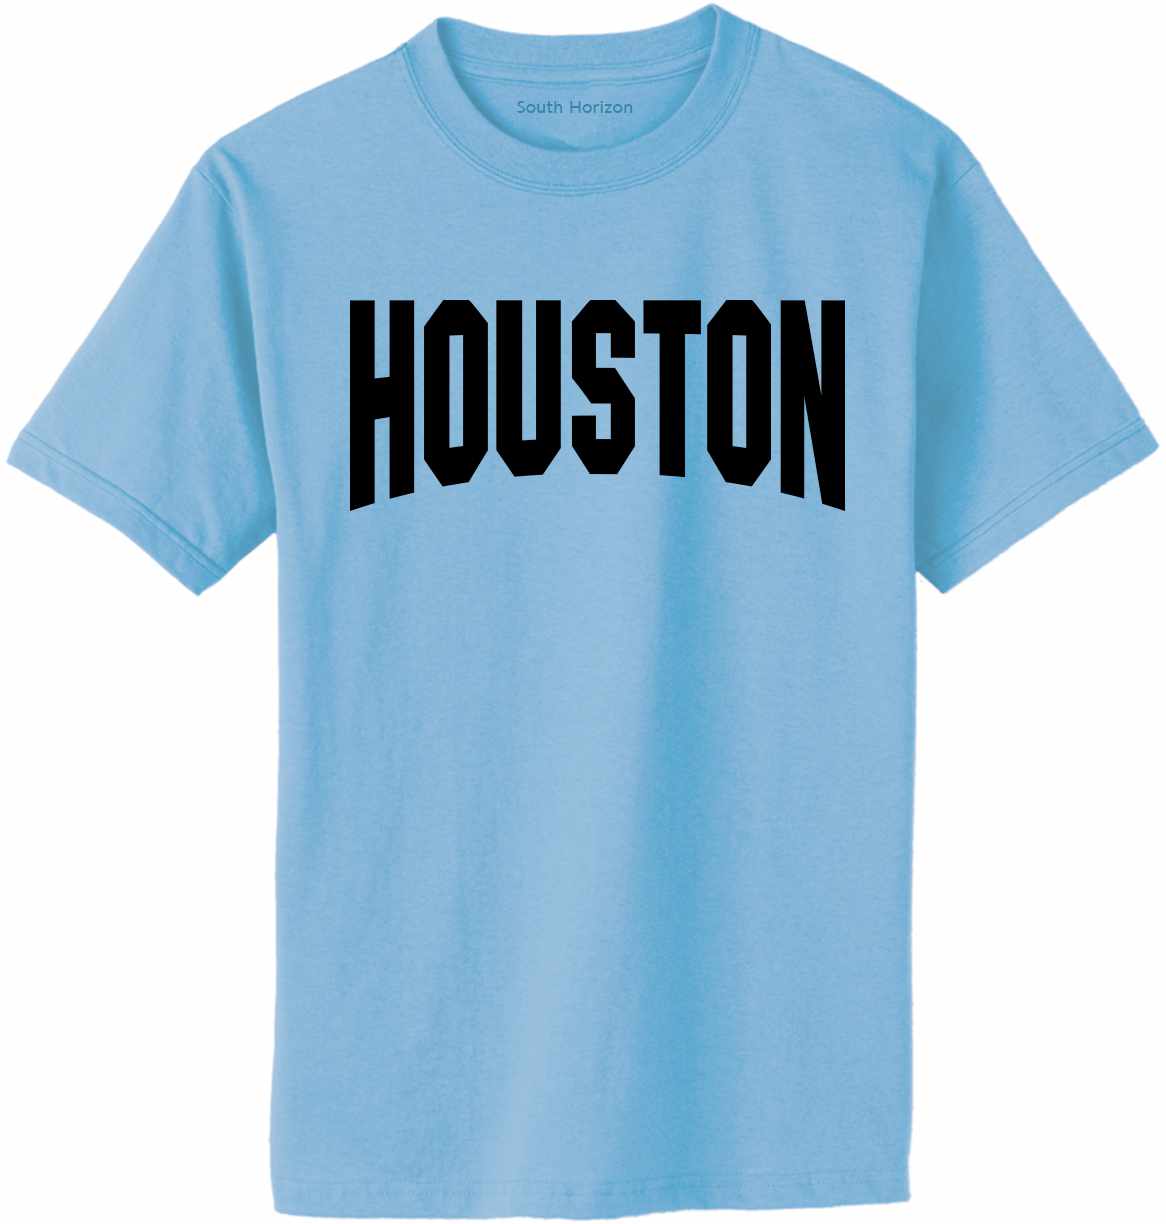 HOUSTON on Adult T-Shirt (#1195-1)